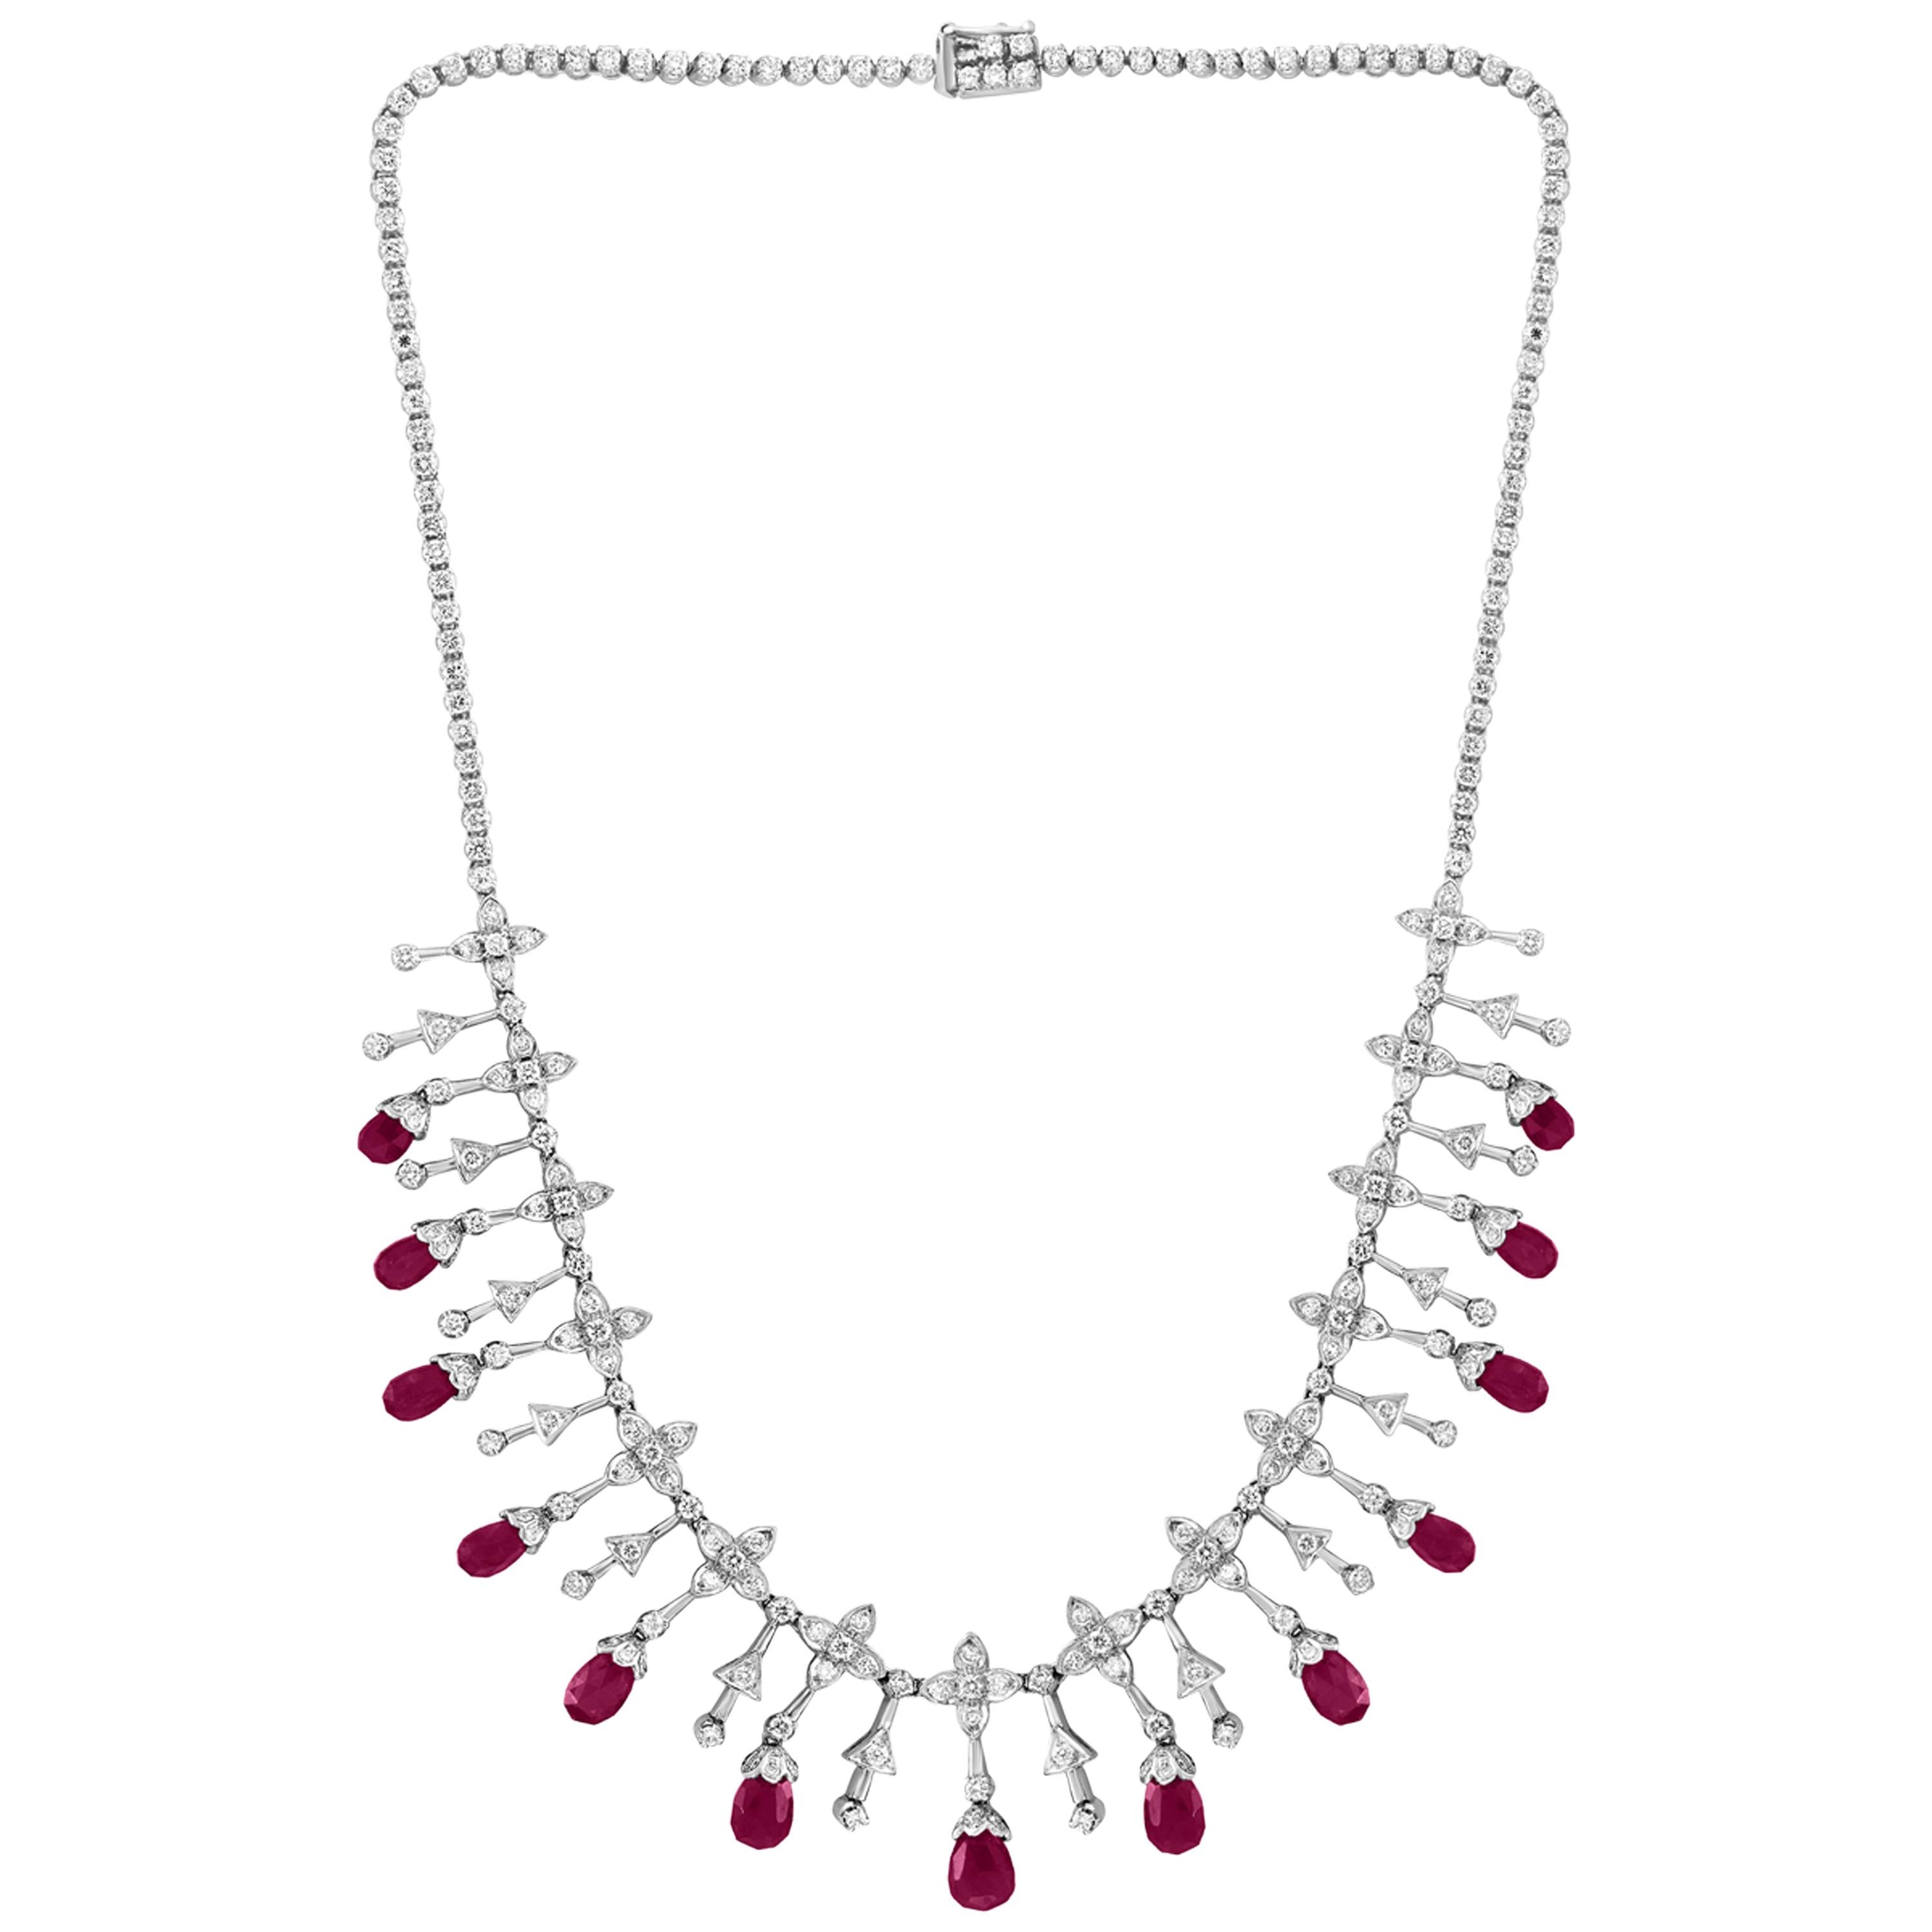 18 Ct Natural Ruby Briolette & 8 Ct Diamond Necklace 18 Karat White Gold, Estate